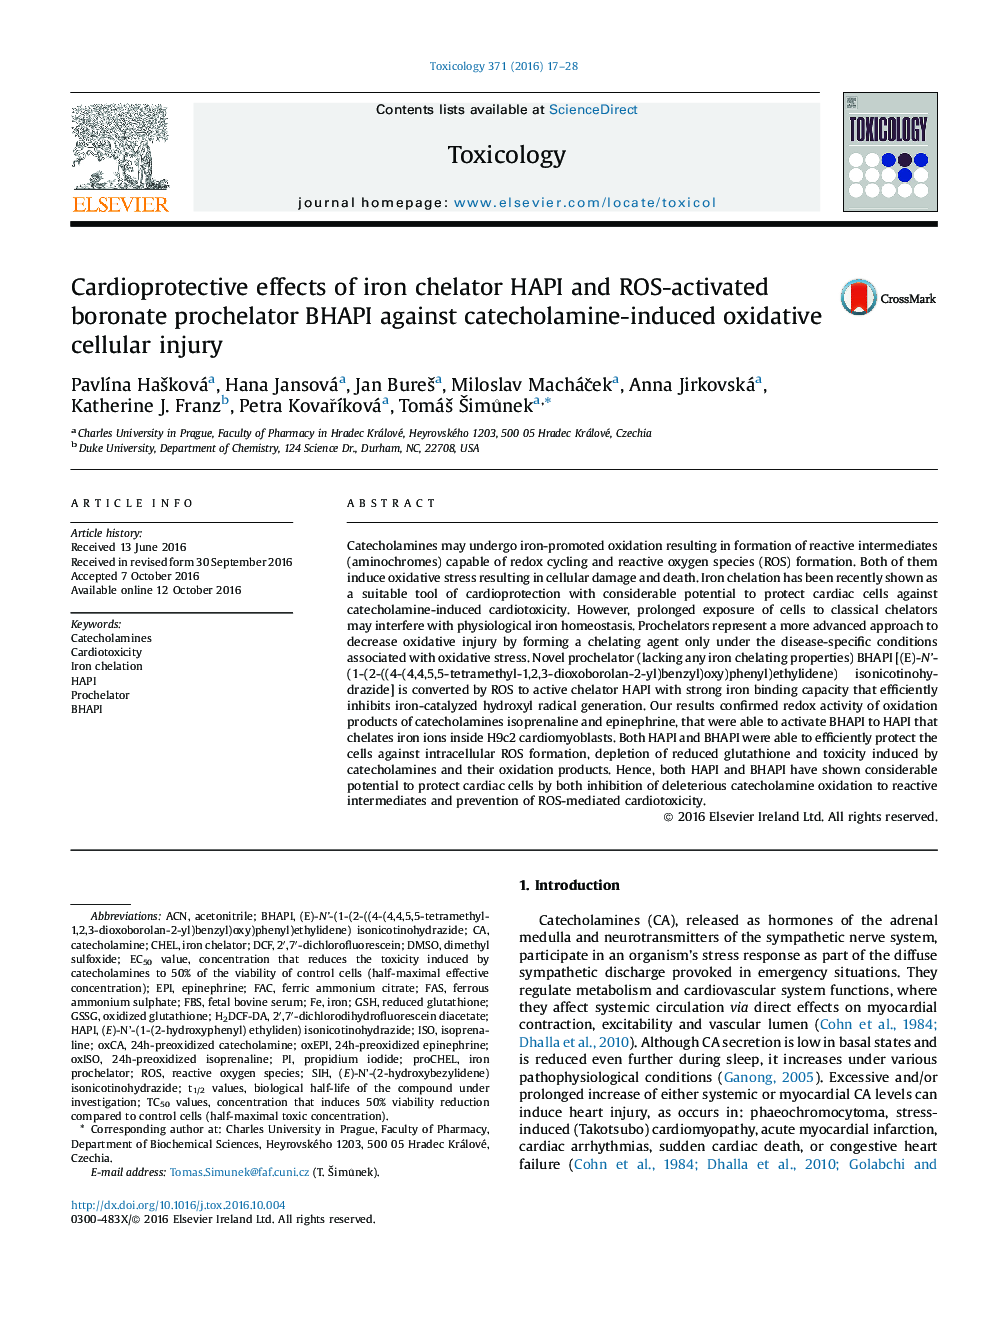 Cardioprotective effects of iron chelator HAPI and ROS-activated boronate prochelator BHAPI against catecholamine-induced oxidative cellular injury